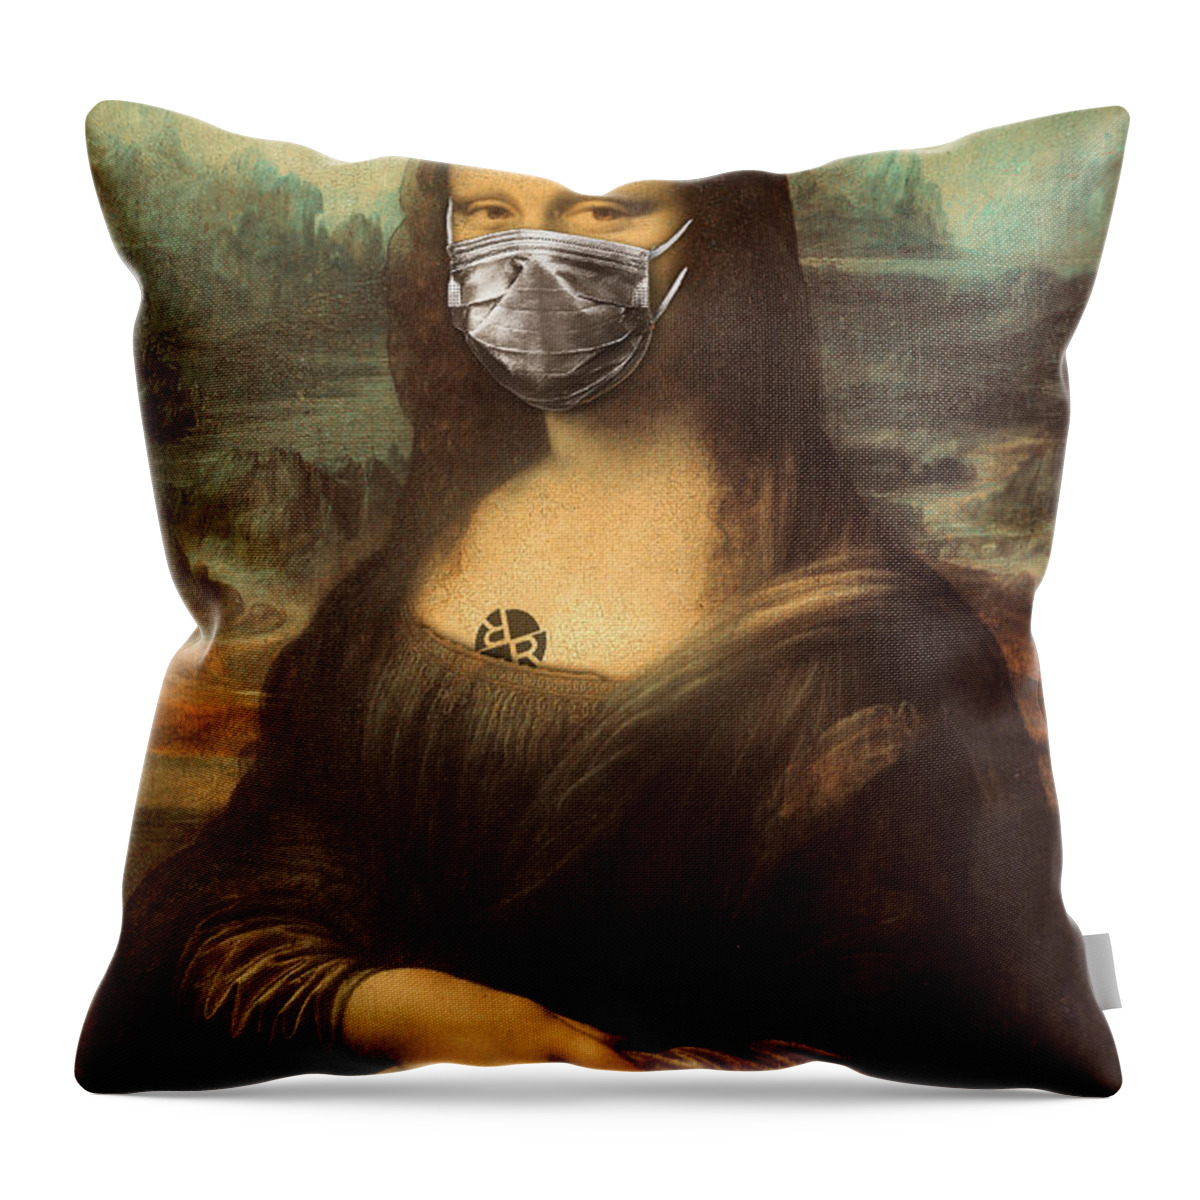 Covid 19 Throw Pillow featuring the painting Mona Lisa Corona Virus by Tony Rubino